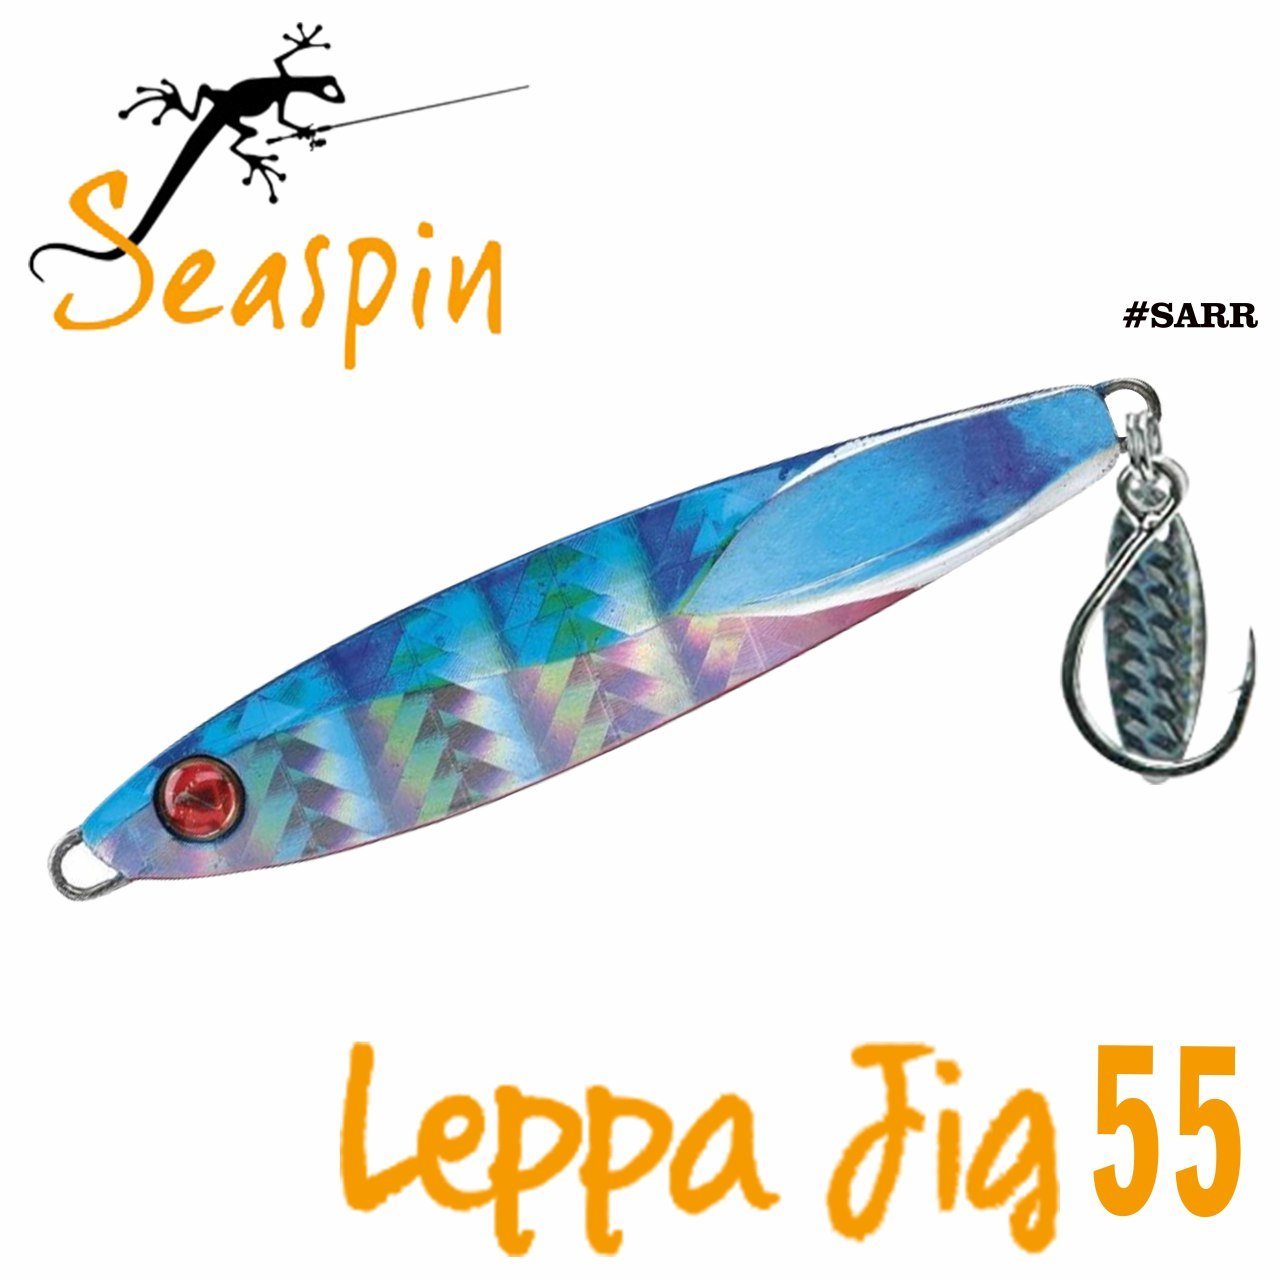 Seaspin Leppa 55gr jig yem #SARR